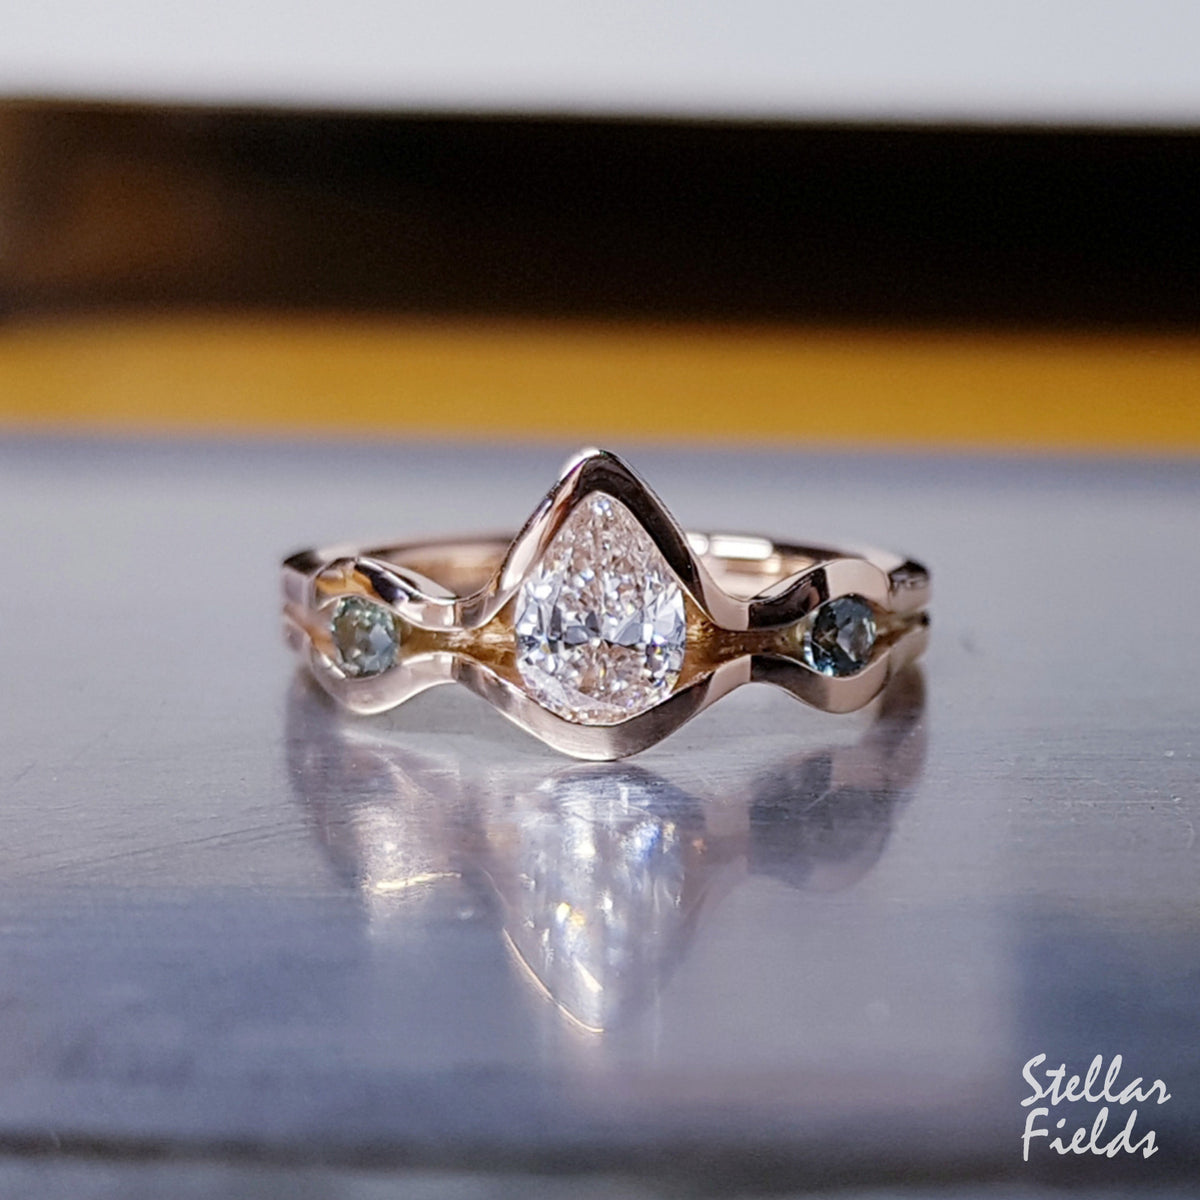 Modern Three Stone Pear Diamond Engagement Ring Teal Montana Sapphire 14k Rose Gold Stellar Fields Jewelry